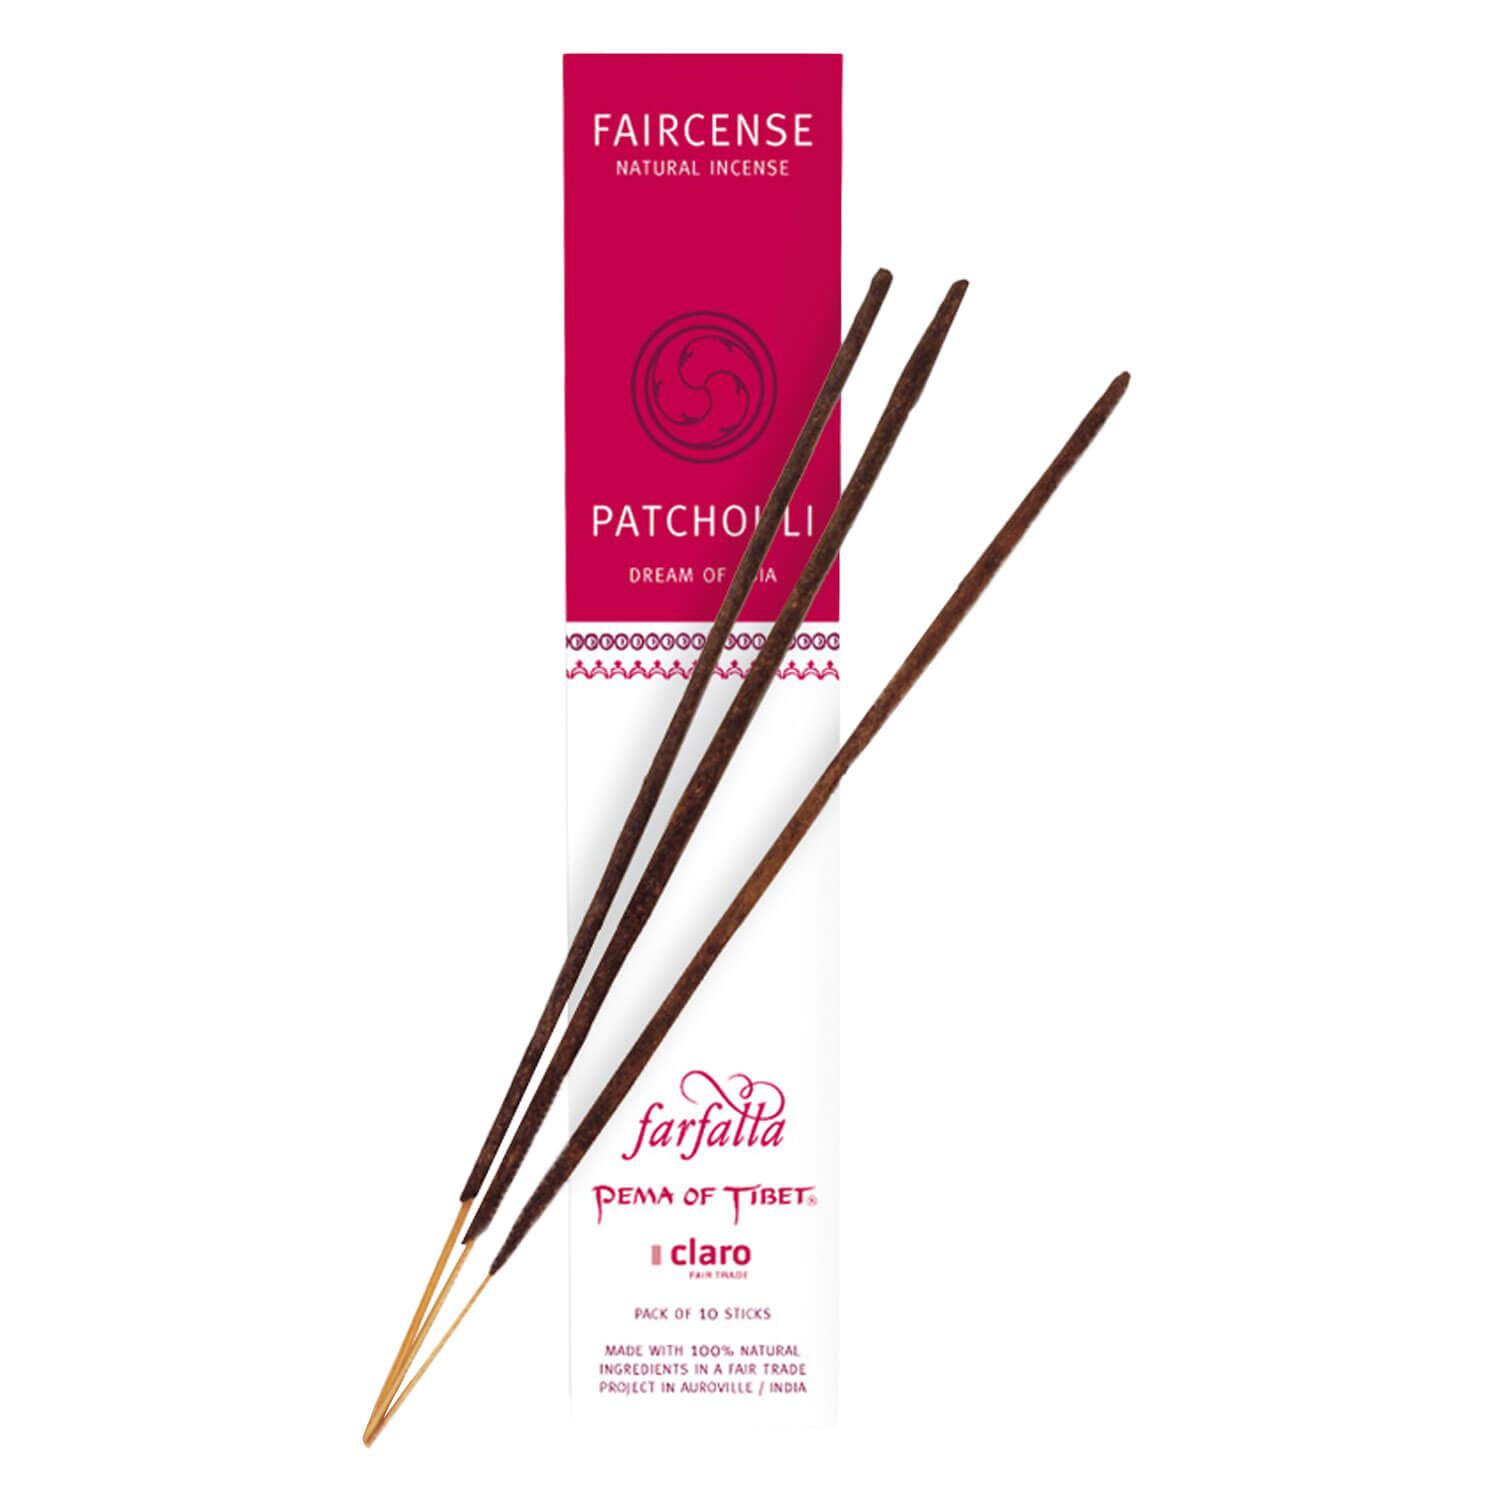 Farfalla Räucherstäbchen - Patchouli/Dream of Asia Faircense Incense Sticks